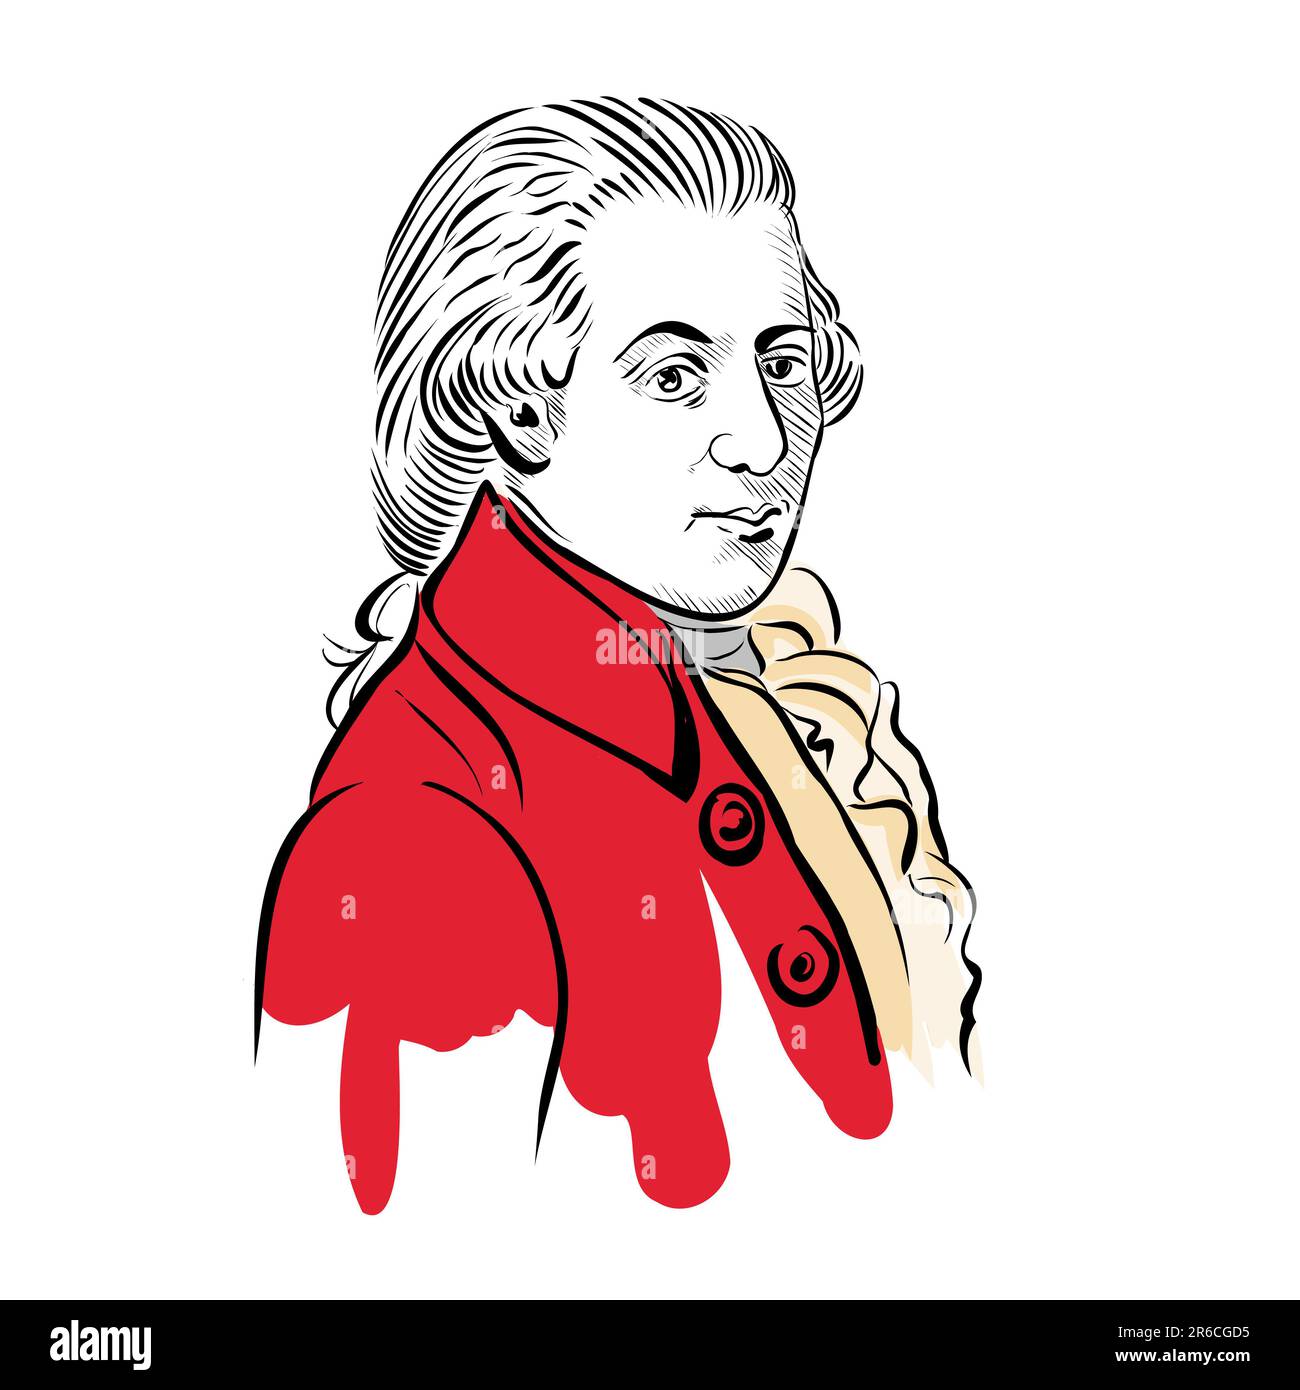 Mozart, Wolfgang Amadeus, portrait image, vector illustration, black and white hand drawn sketch isolated on white background Stock Photo